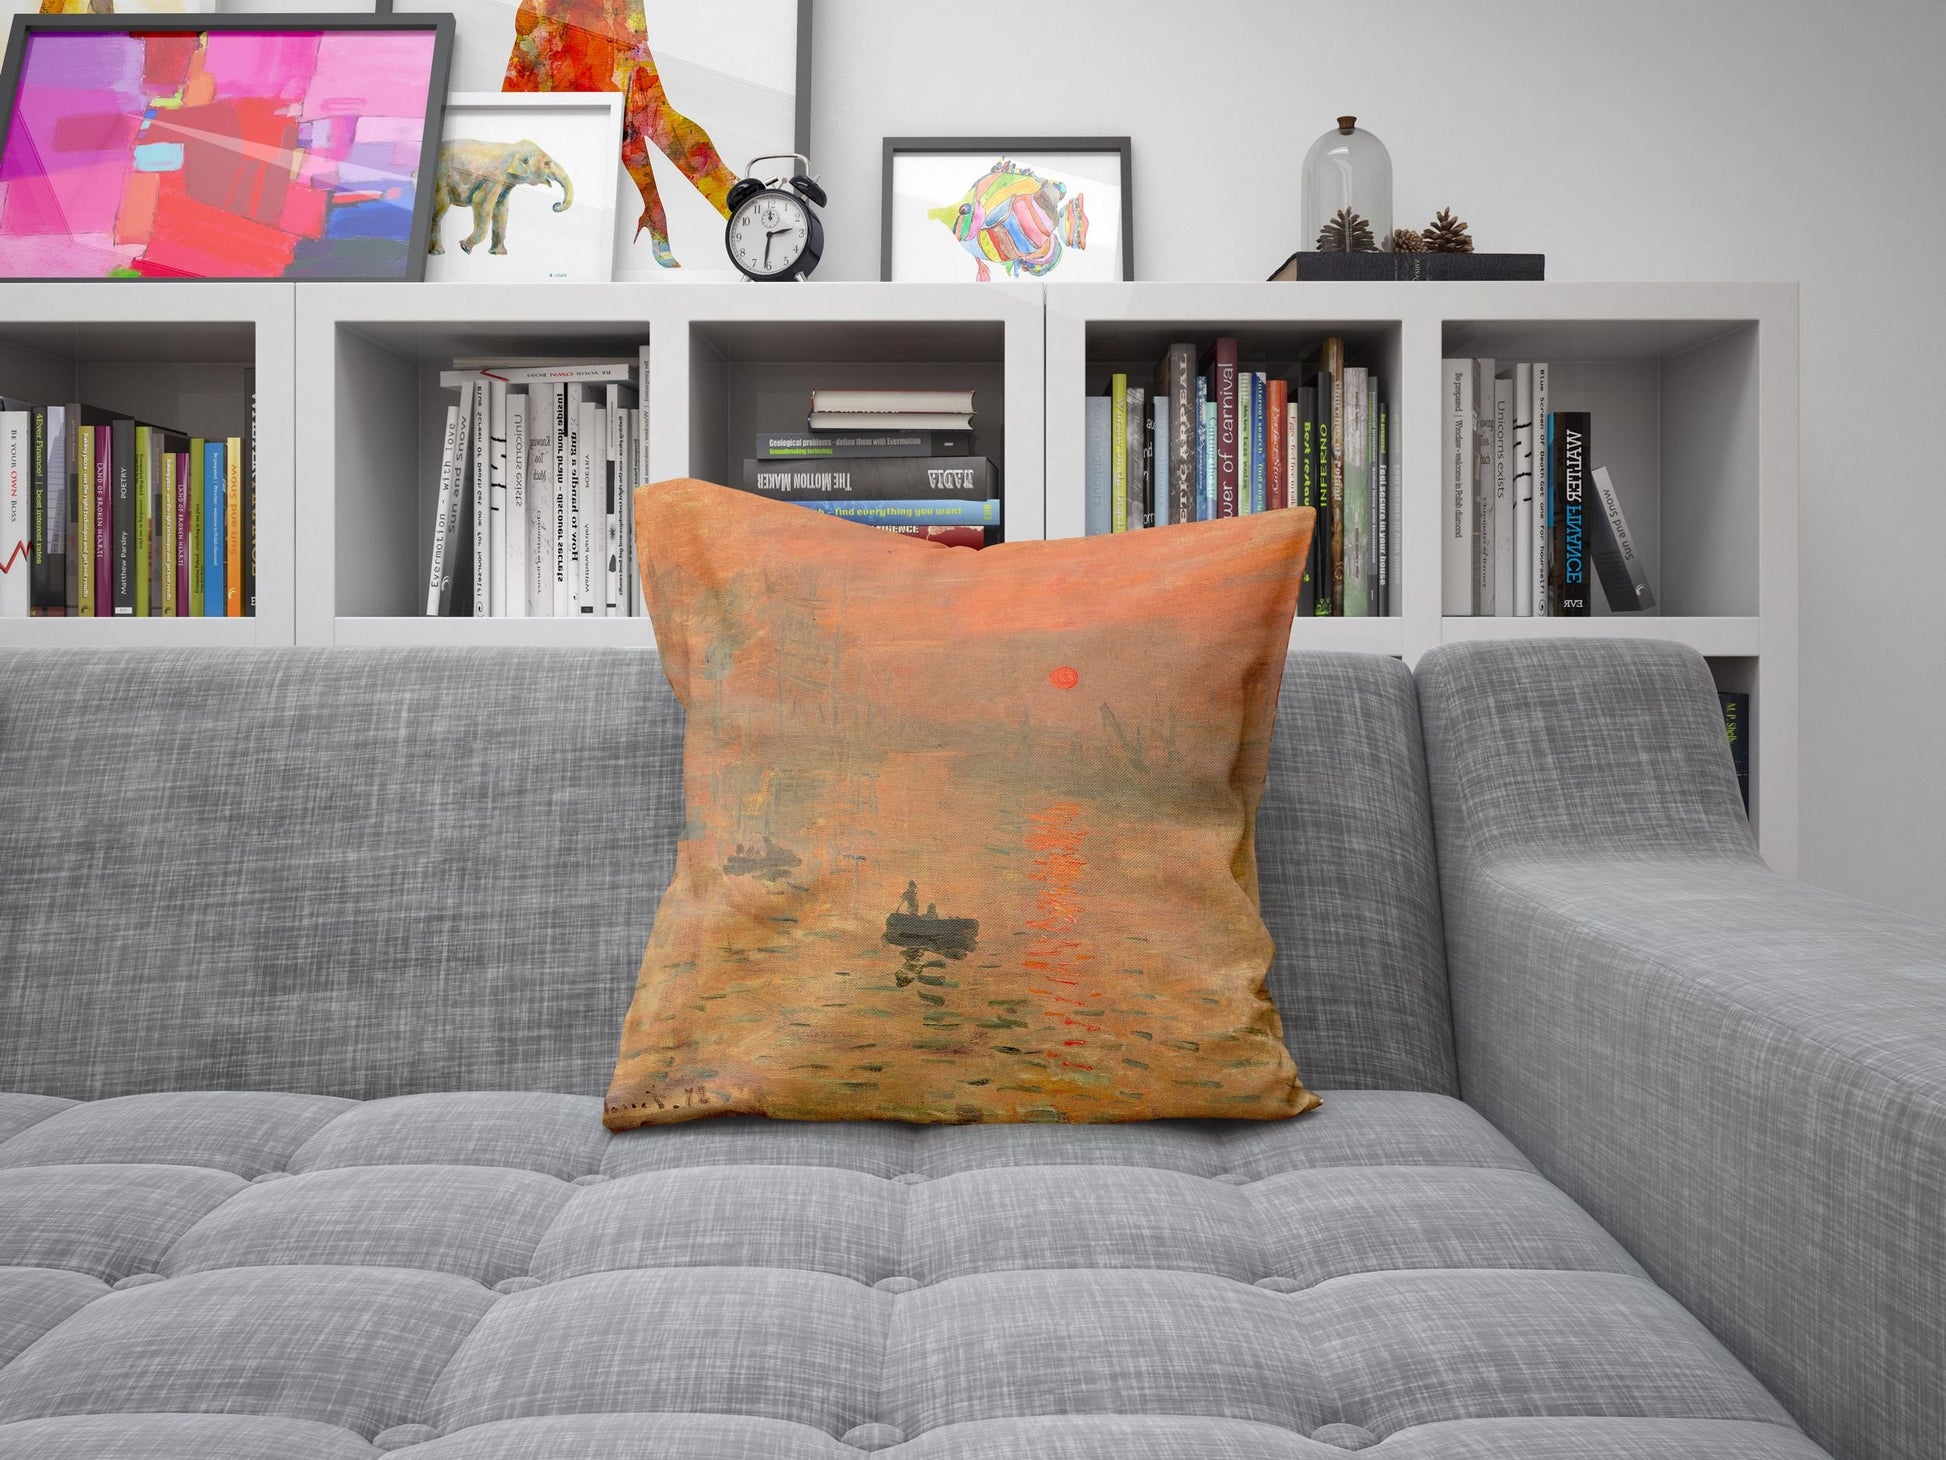 Claude Monet Famous Painting Impression Sunrise, Toss Pillow, Throw Pillow Cover, Designer Pillow, Orange Pillow, Indoor Pillow Cases